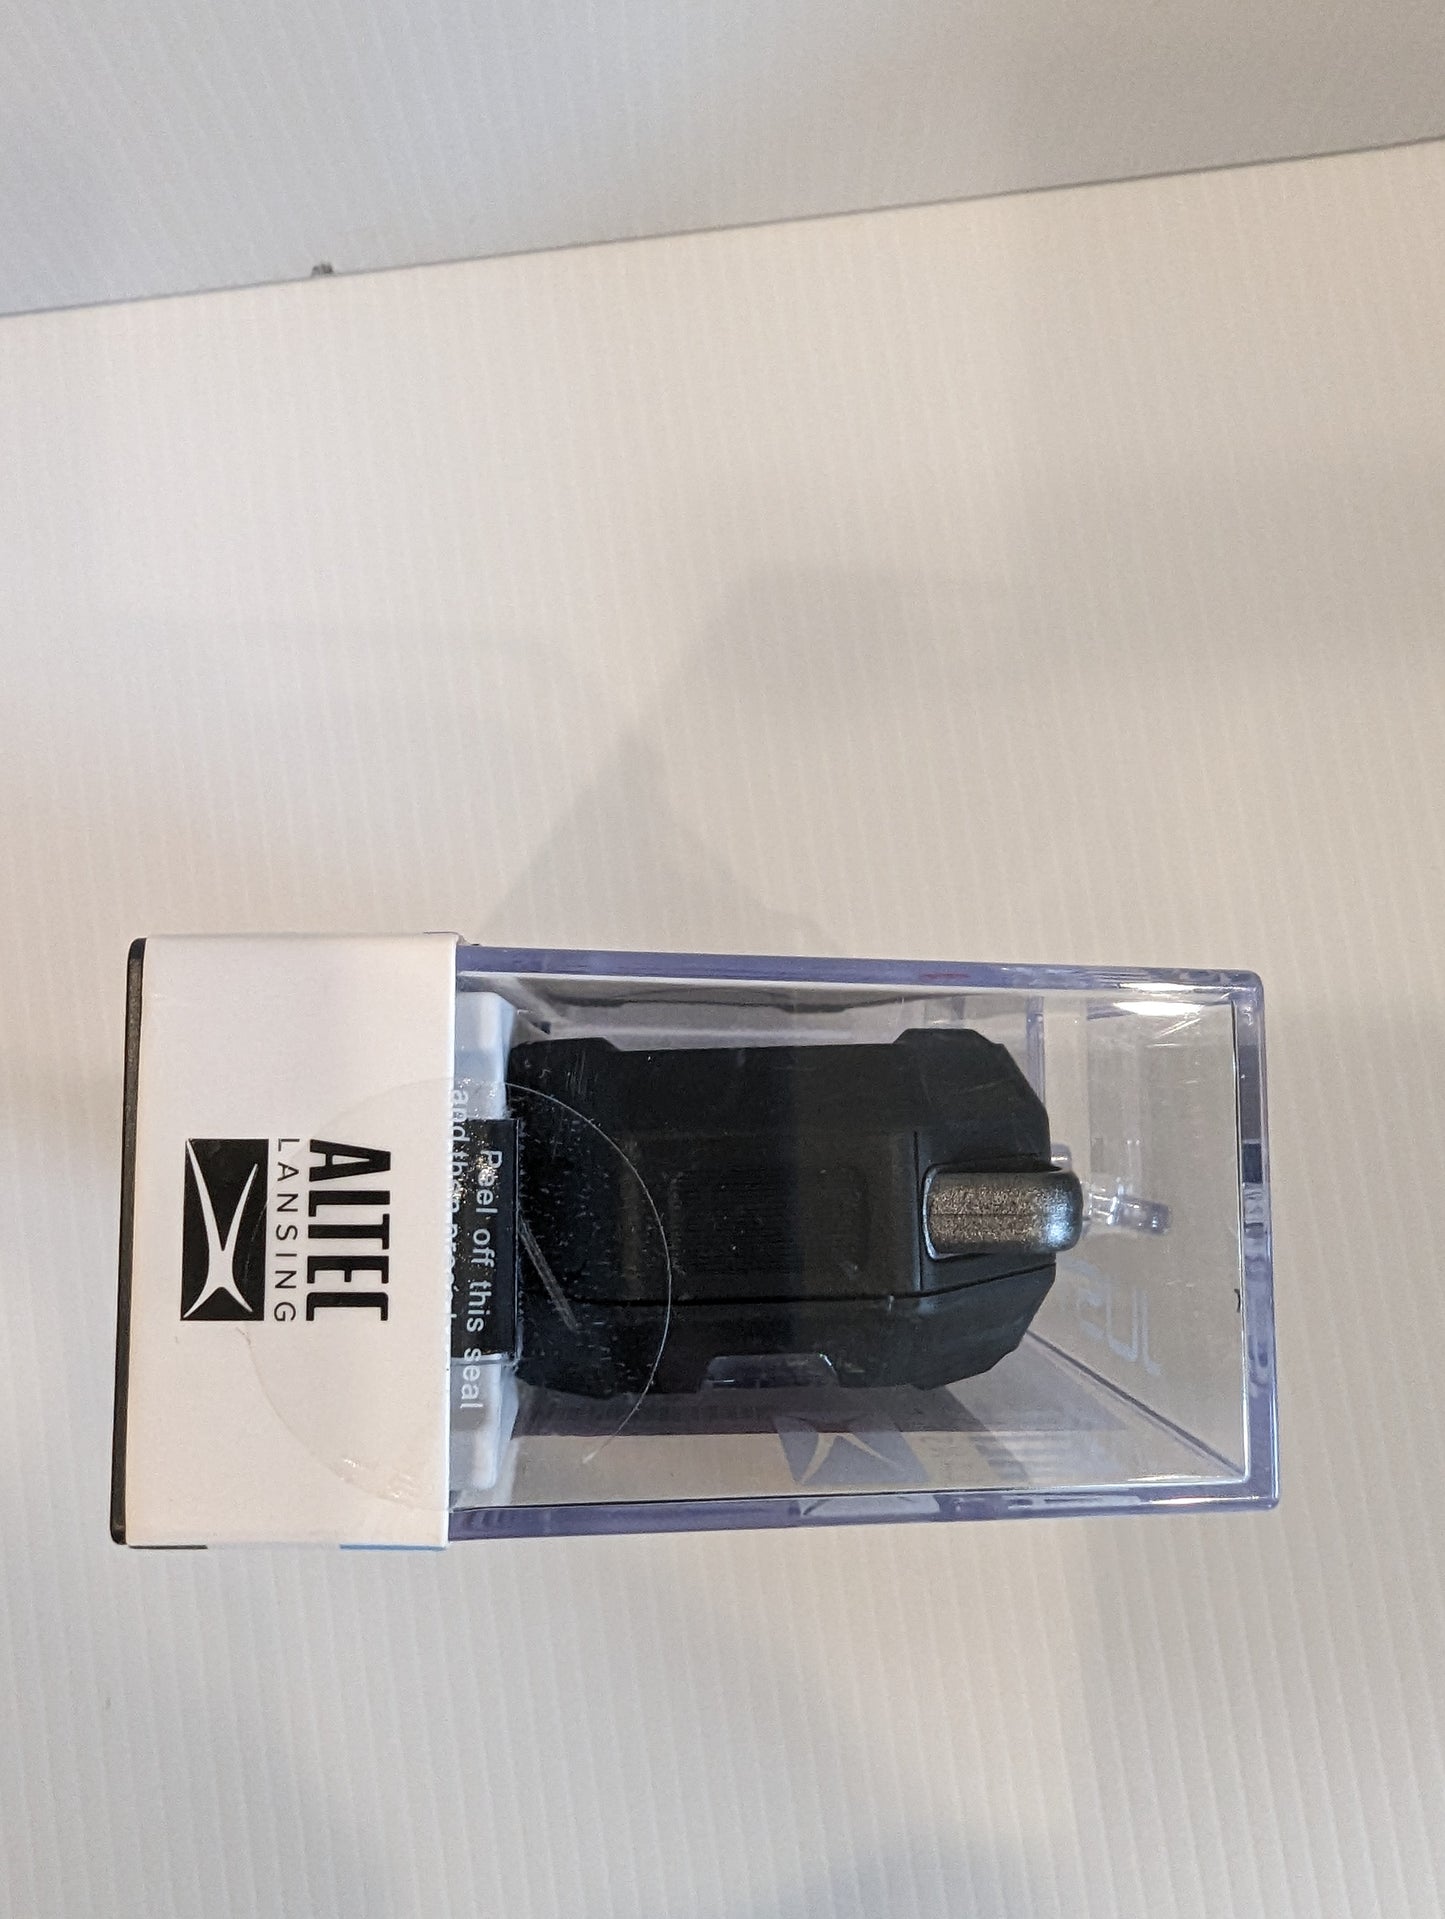 Bluetooth Hydra Mini Waterproof Speaker - by ALTEC LANSING - IMW1000-BLK - NEW